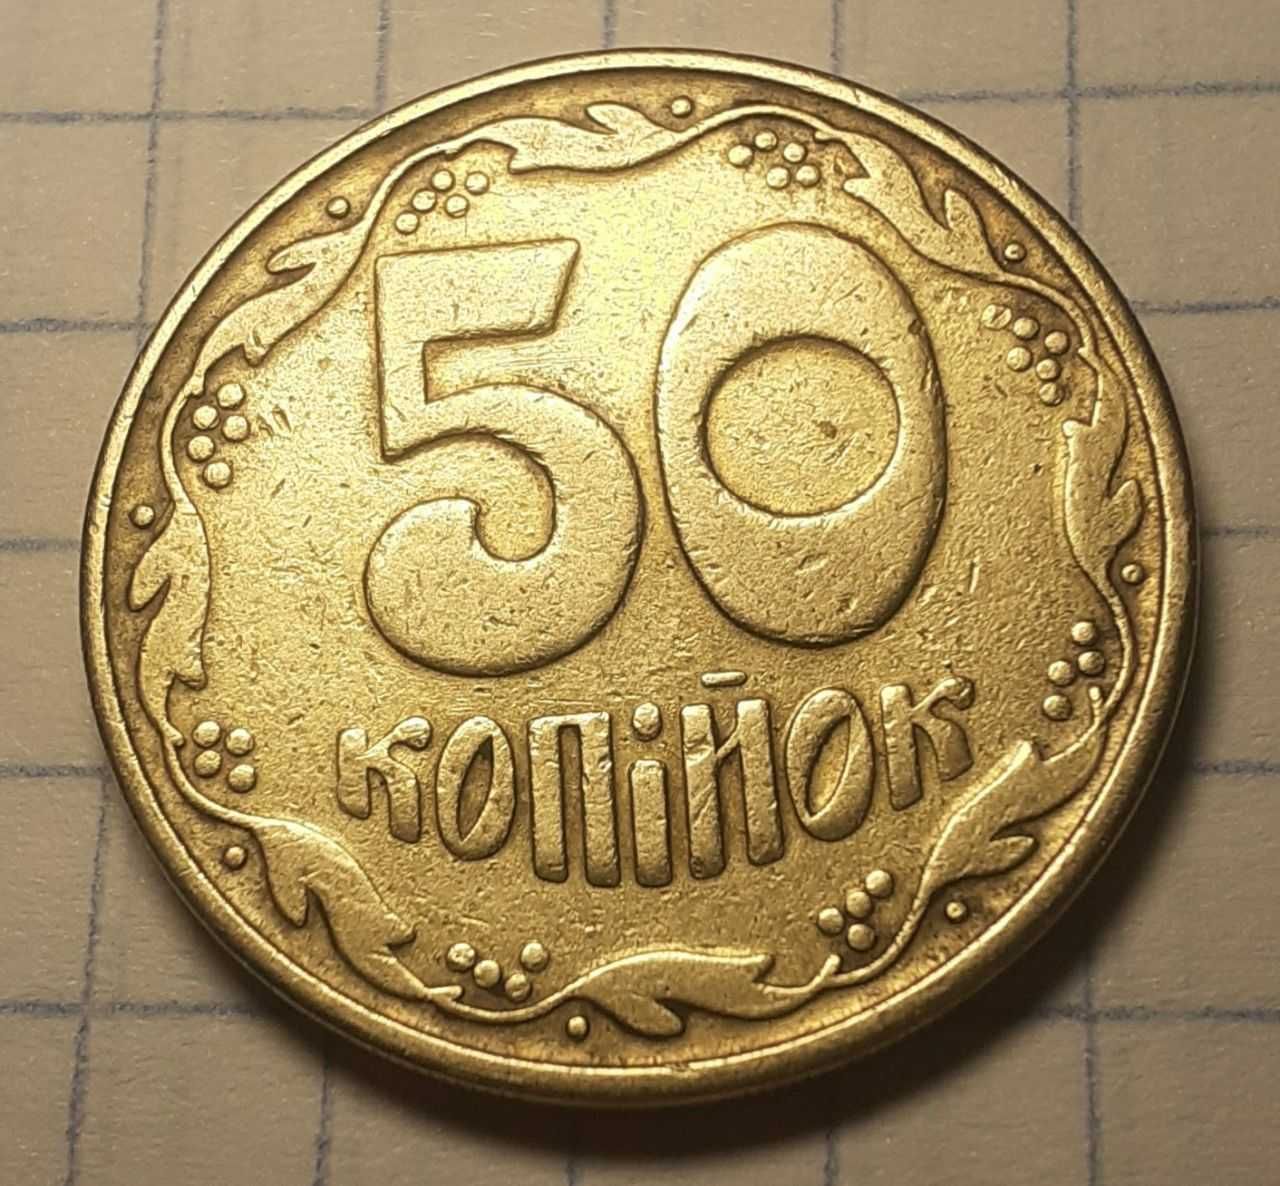 50 копеек 1992 год Украина